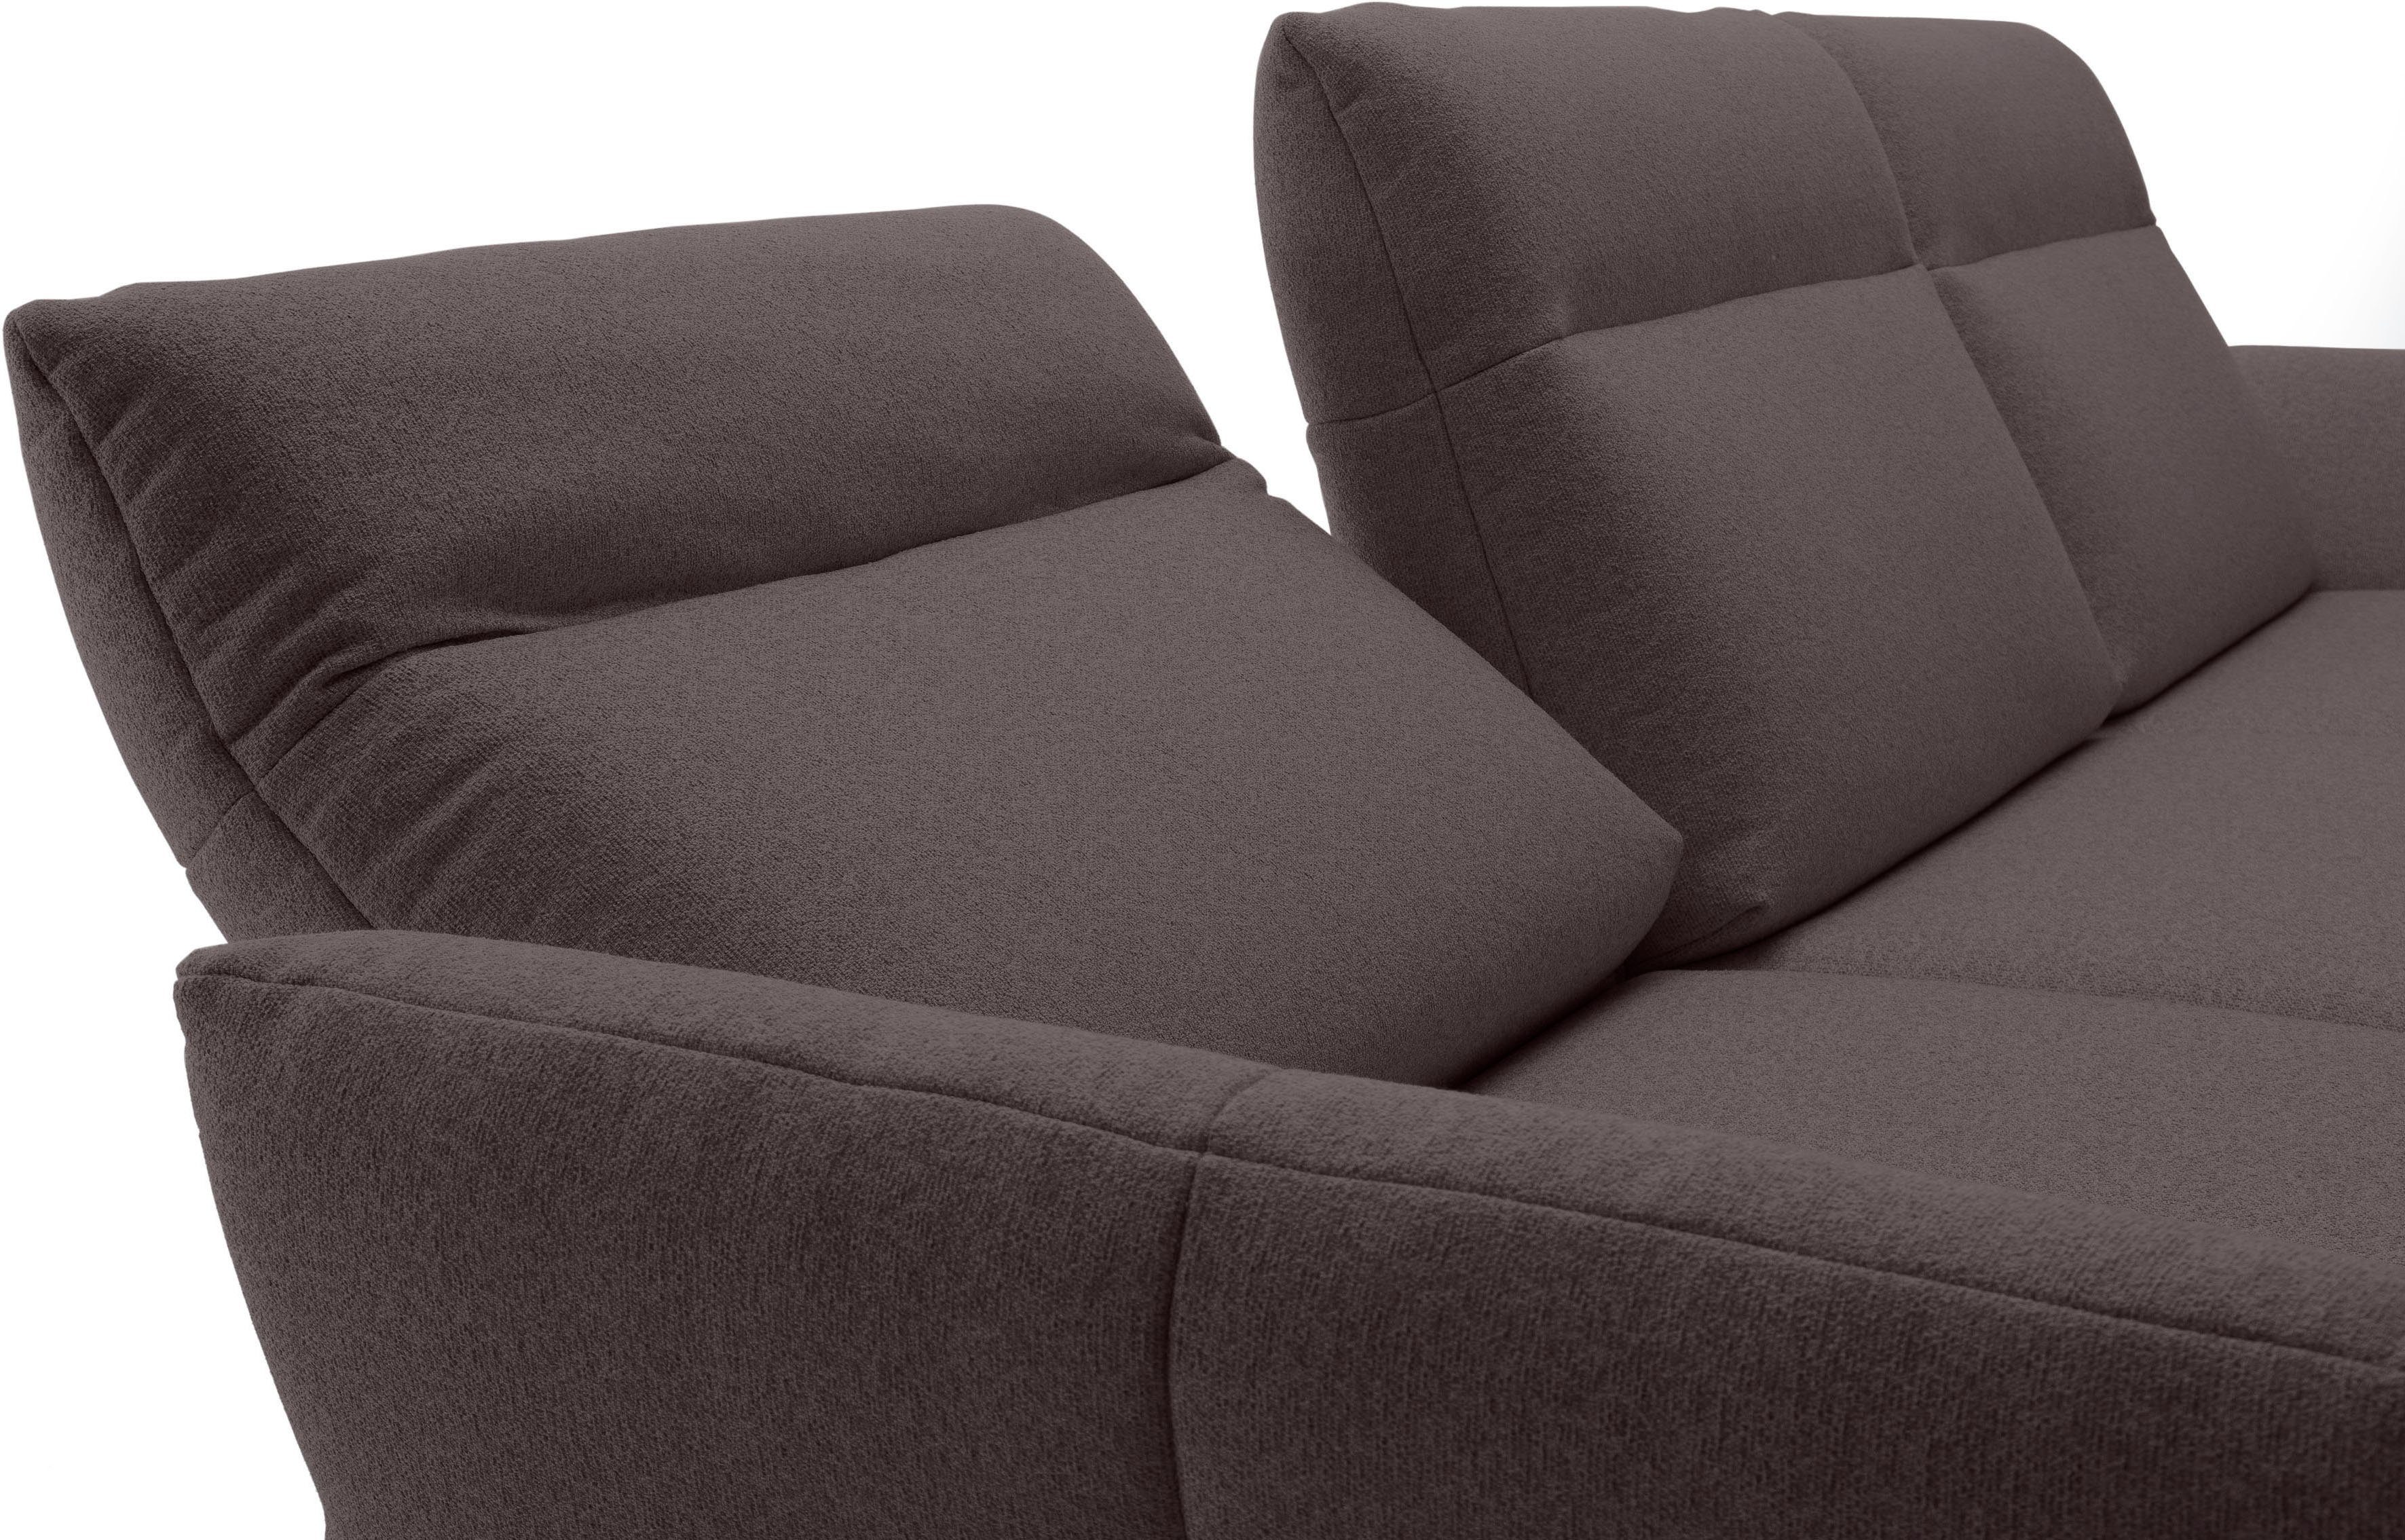 cm Breite sofa Umbragrau, Ecksofa in Winkelfüße hülsta hs.460, Eiche, in Sockel 338